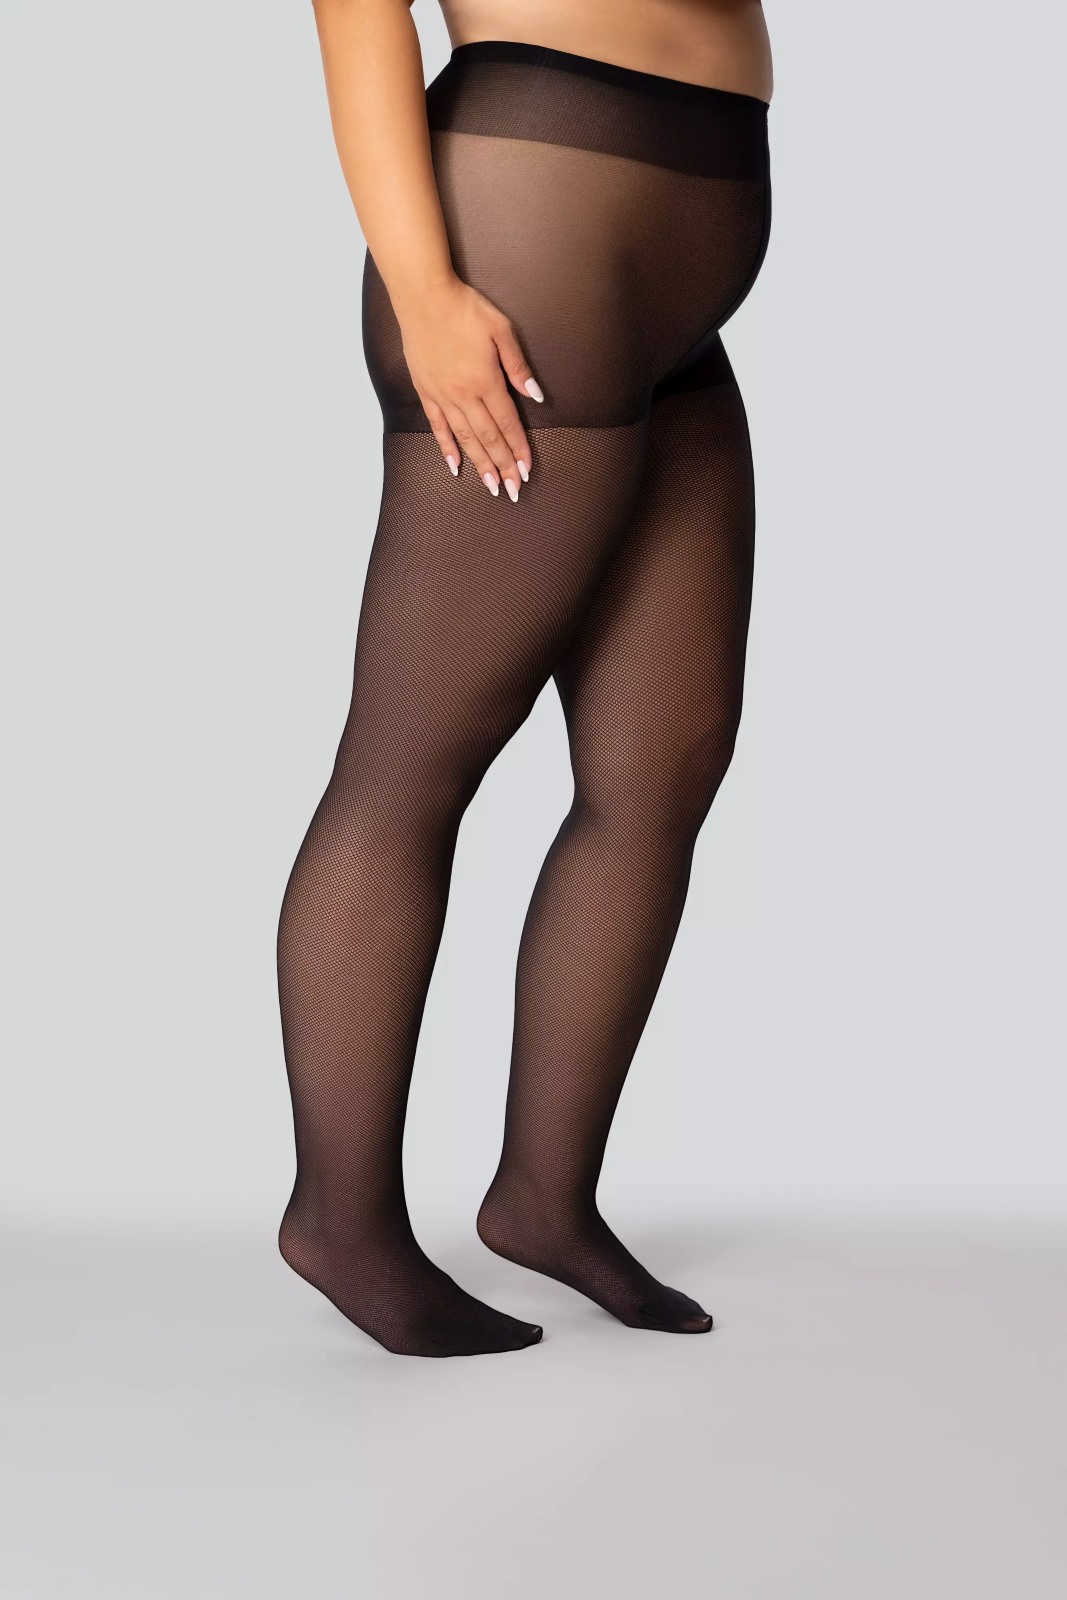 zwarte net panty grote maat - netpanty- fashion panty